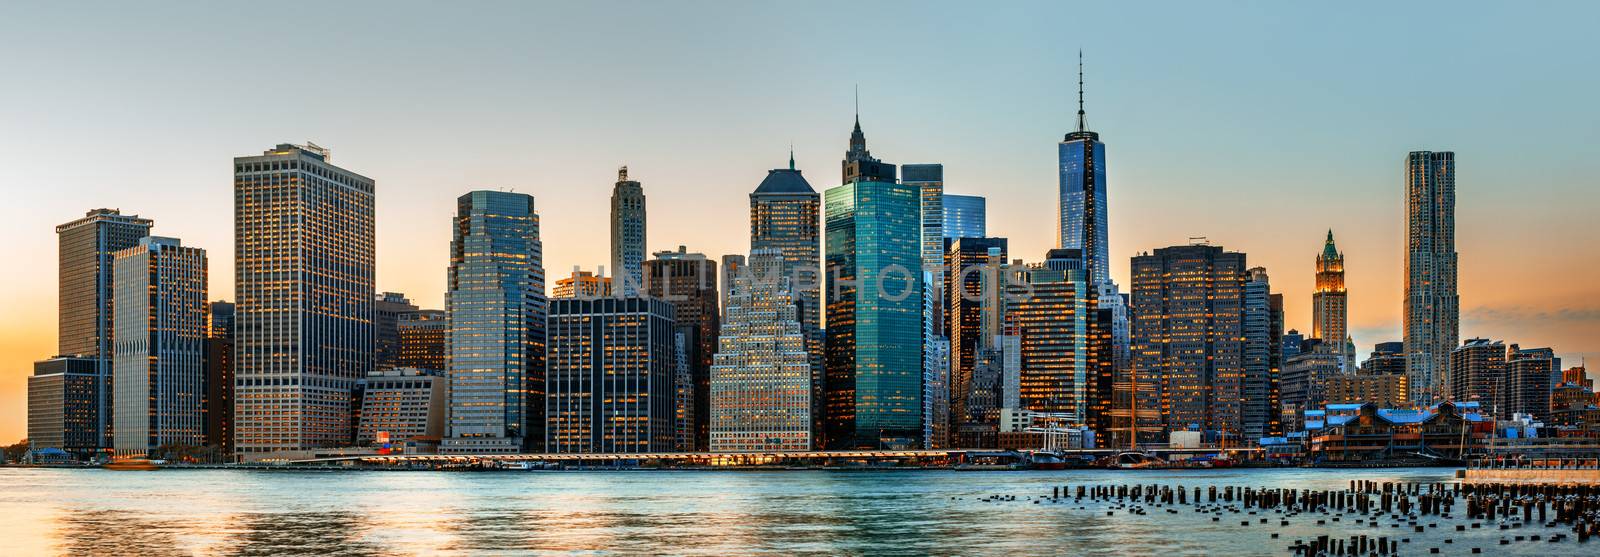 Manhattan. Evening New York City skyline panorama